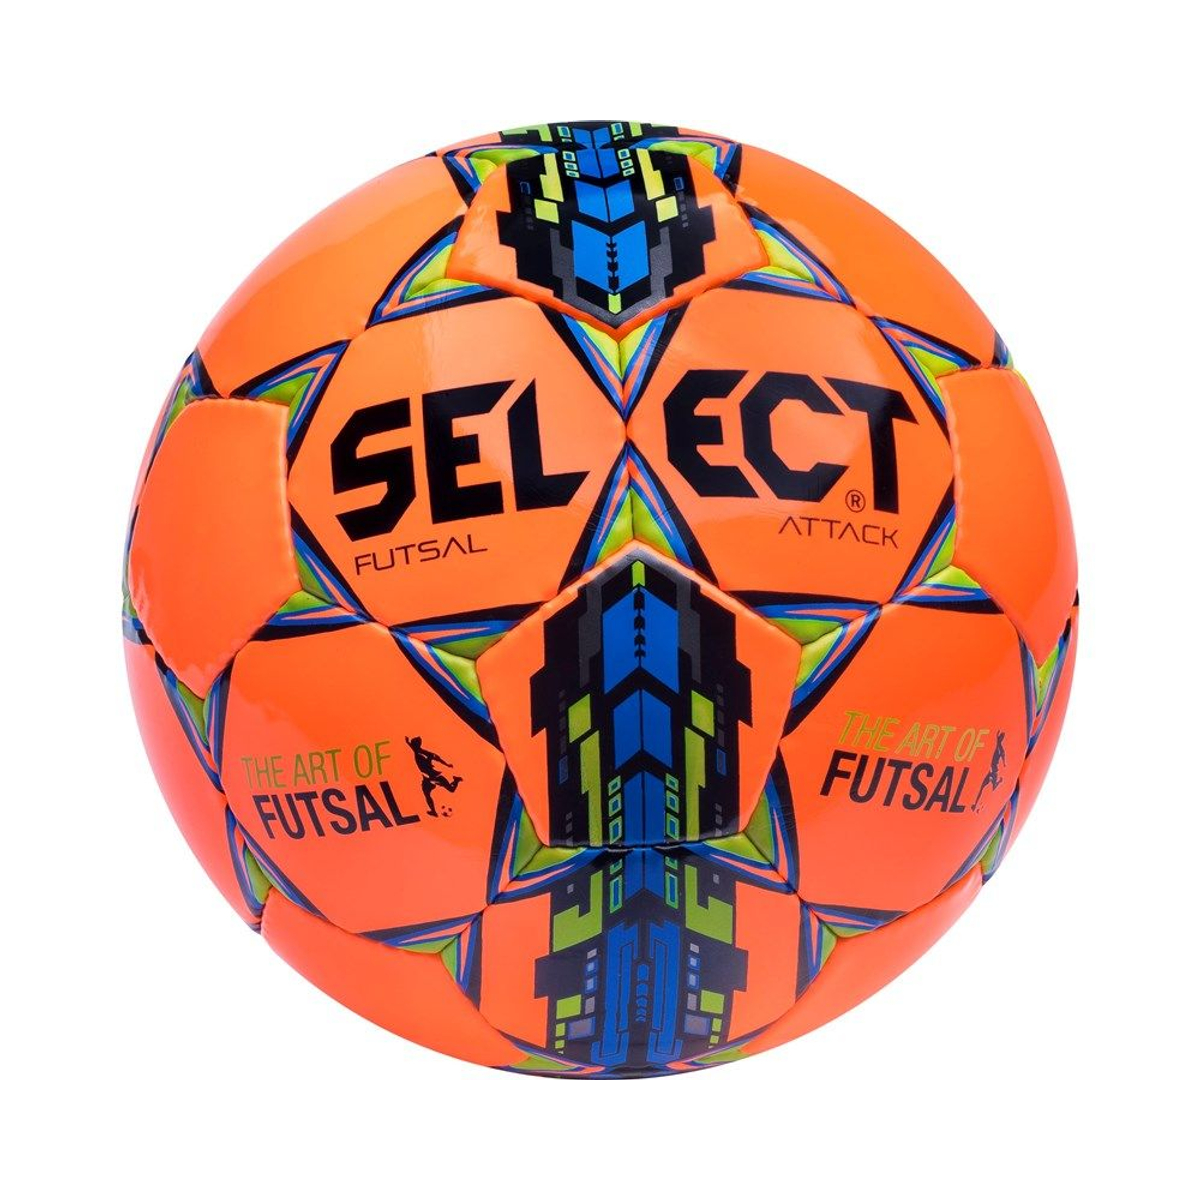 Select Futsal Attack Shiny Orange